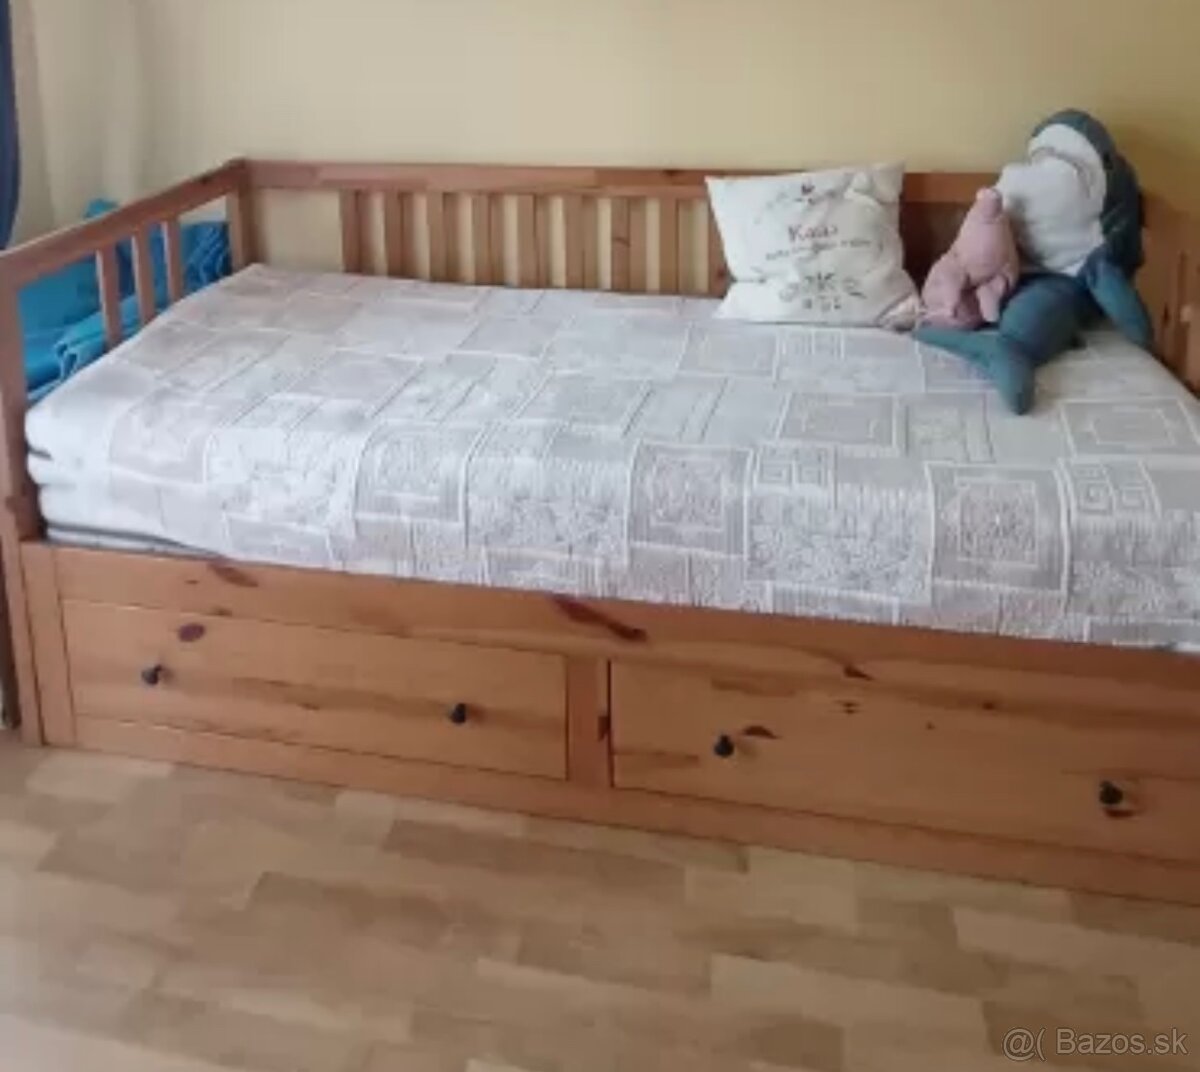 Rozkladacia posteľ